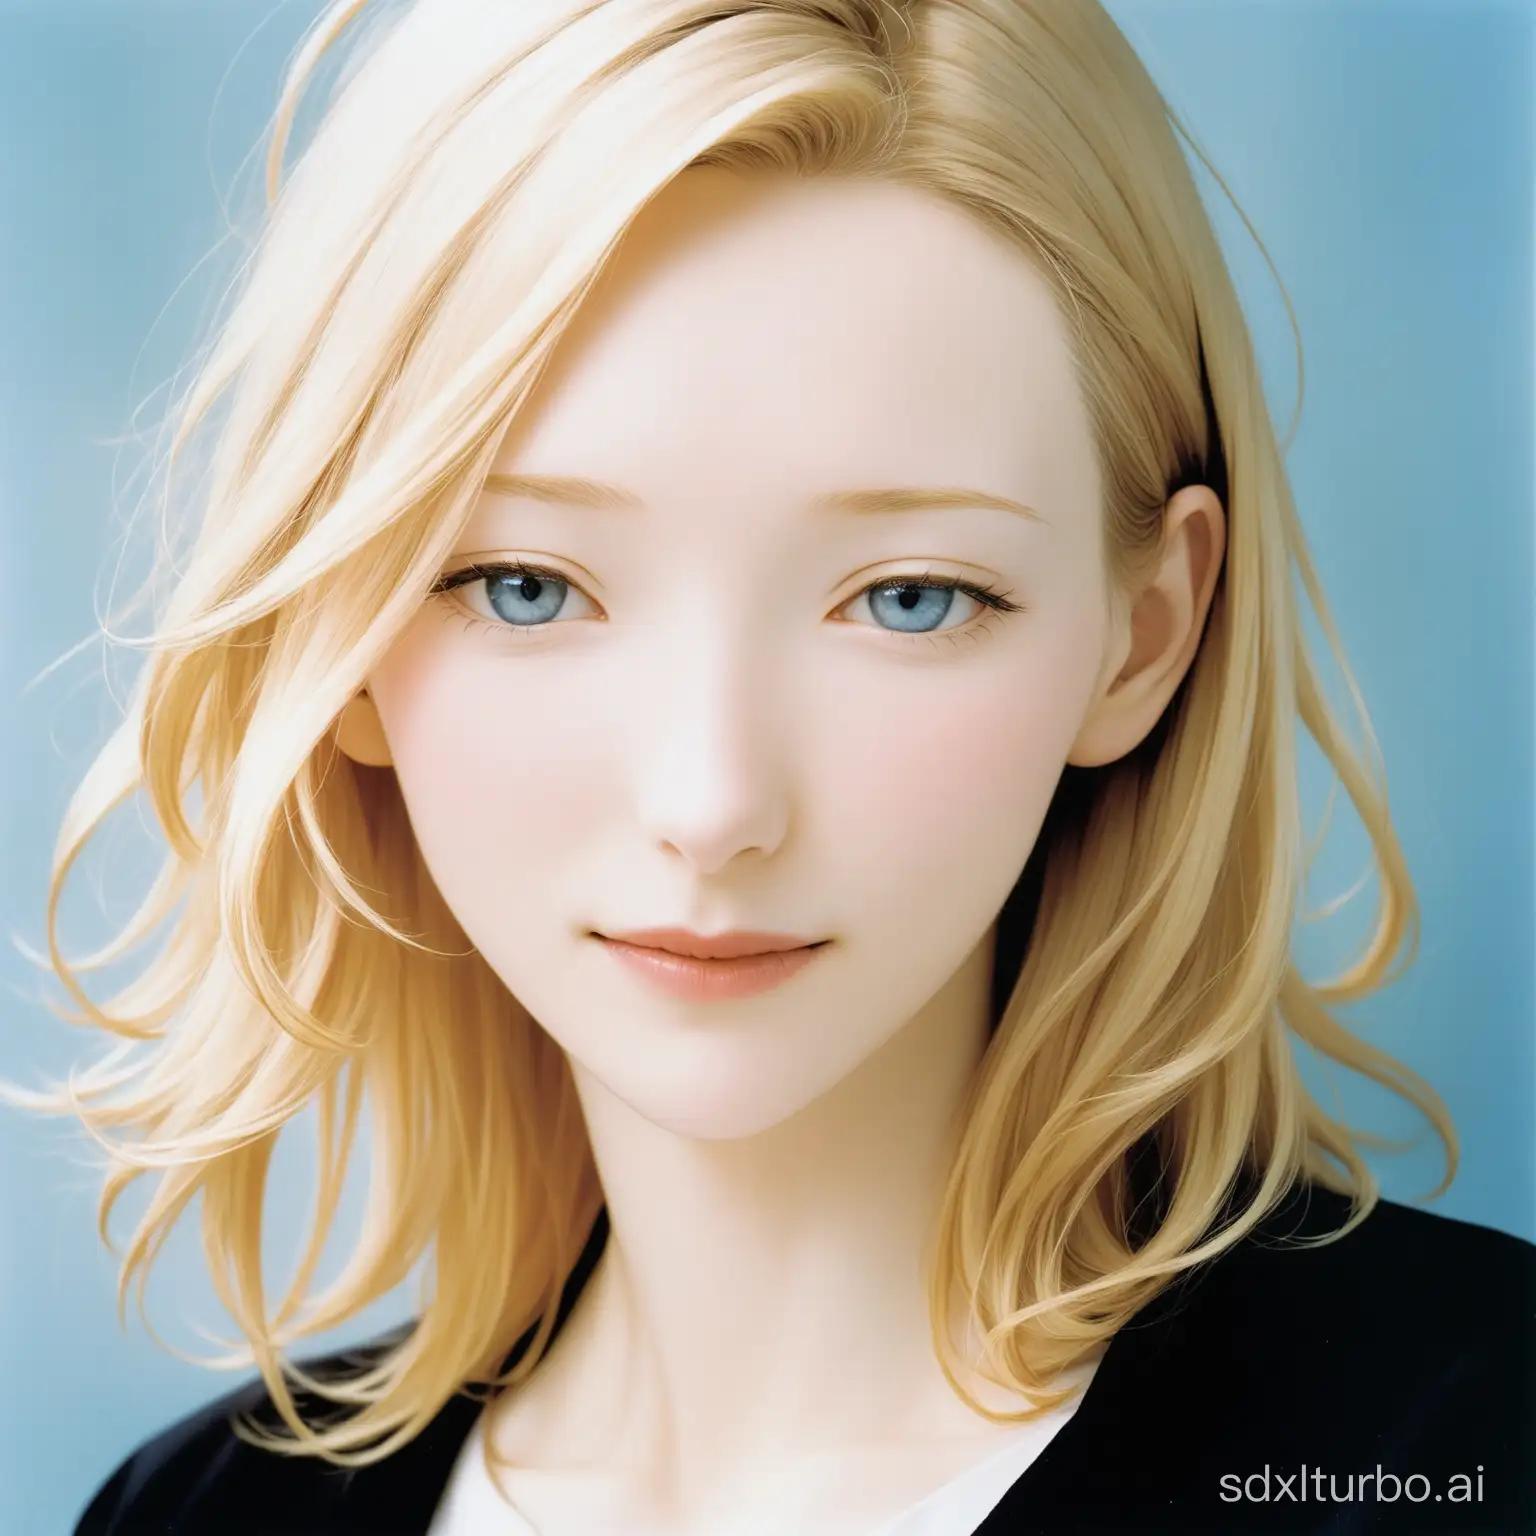 inko Kawauchi's photographic portrait of Cate Blanchett, upper body, about 19 yo